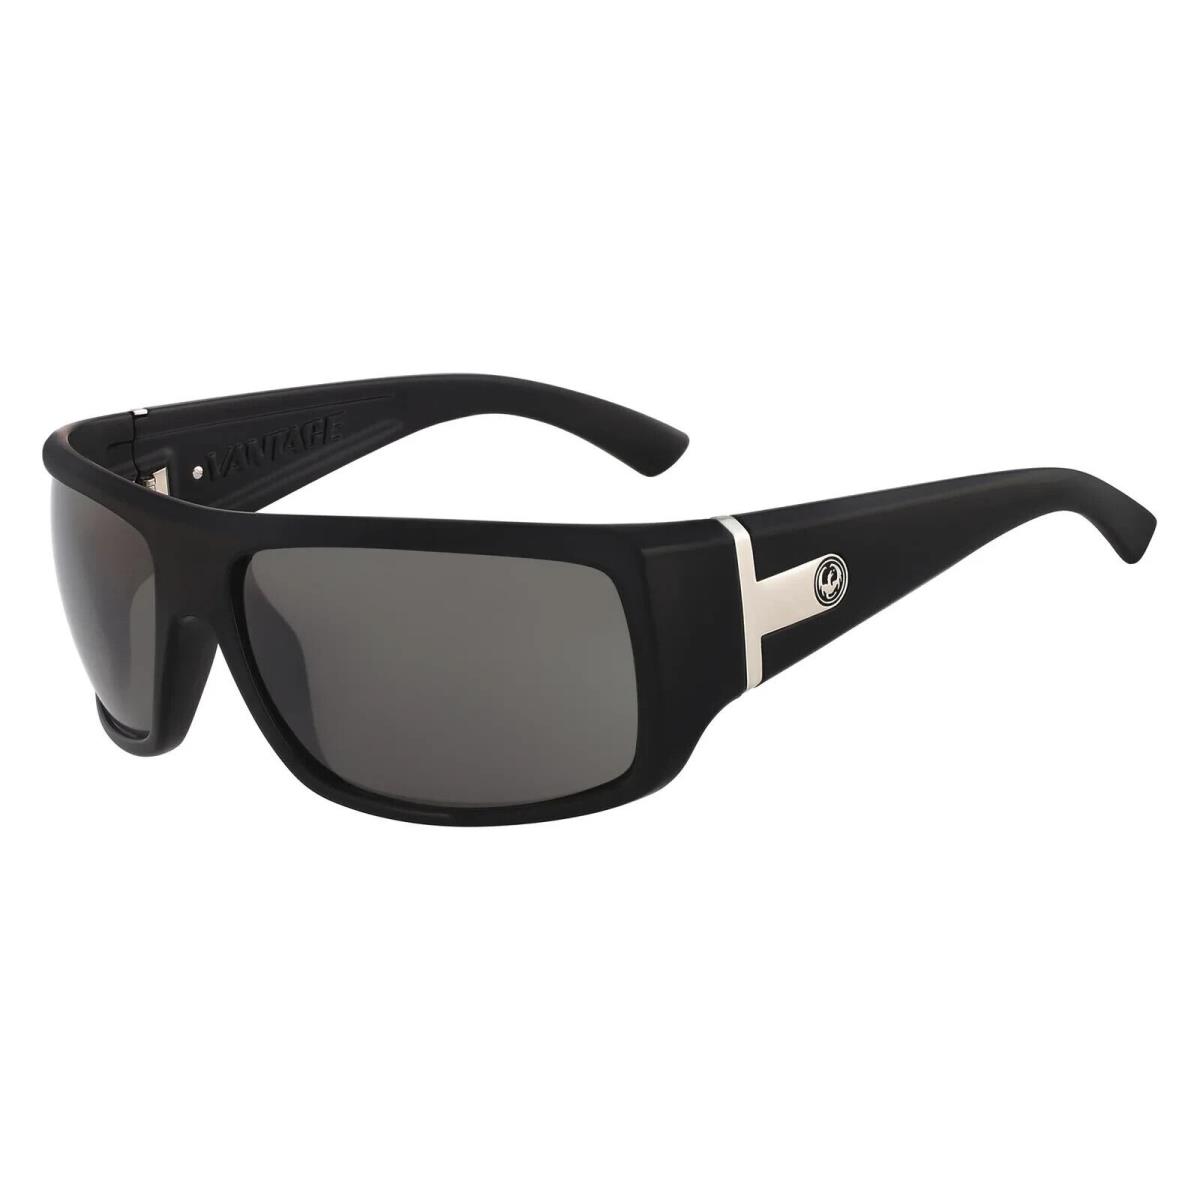 Mens Dragon Vantage Sunglasses Black Grey Lens UV Protection - Black Frame